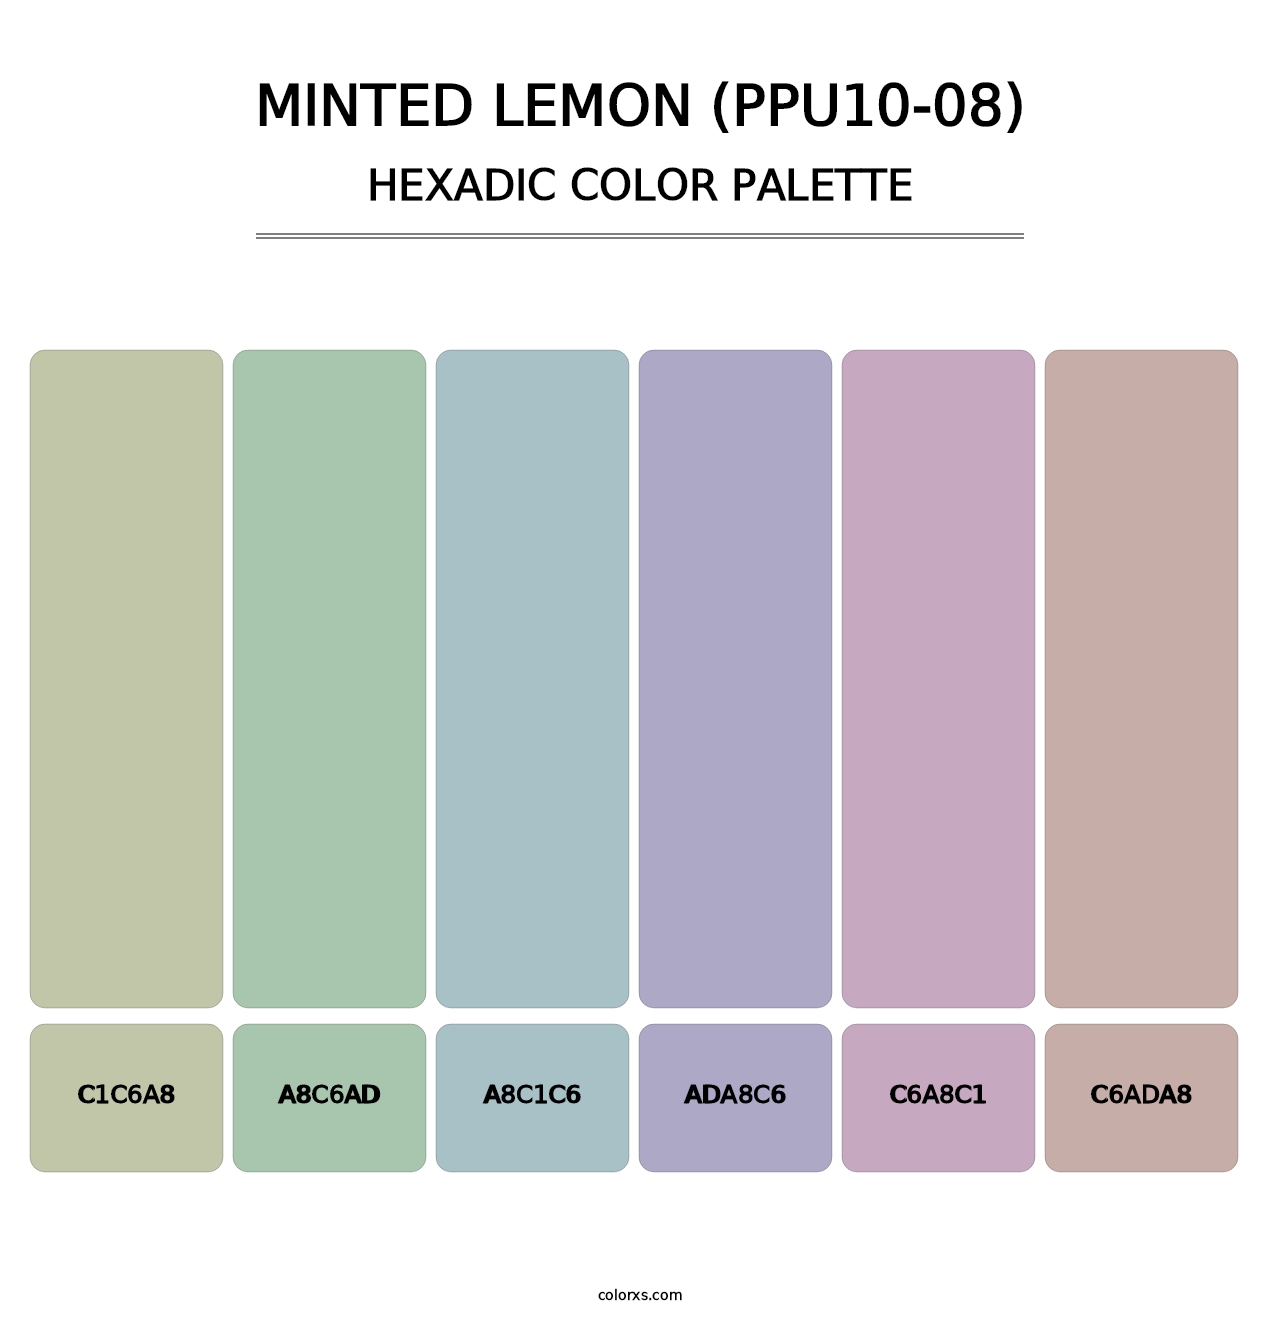 Minted Lemon (PPU10-08) - Hexadic Color Palette